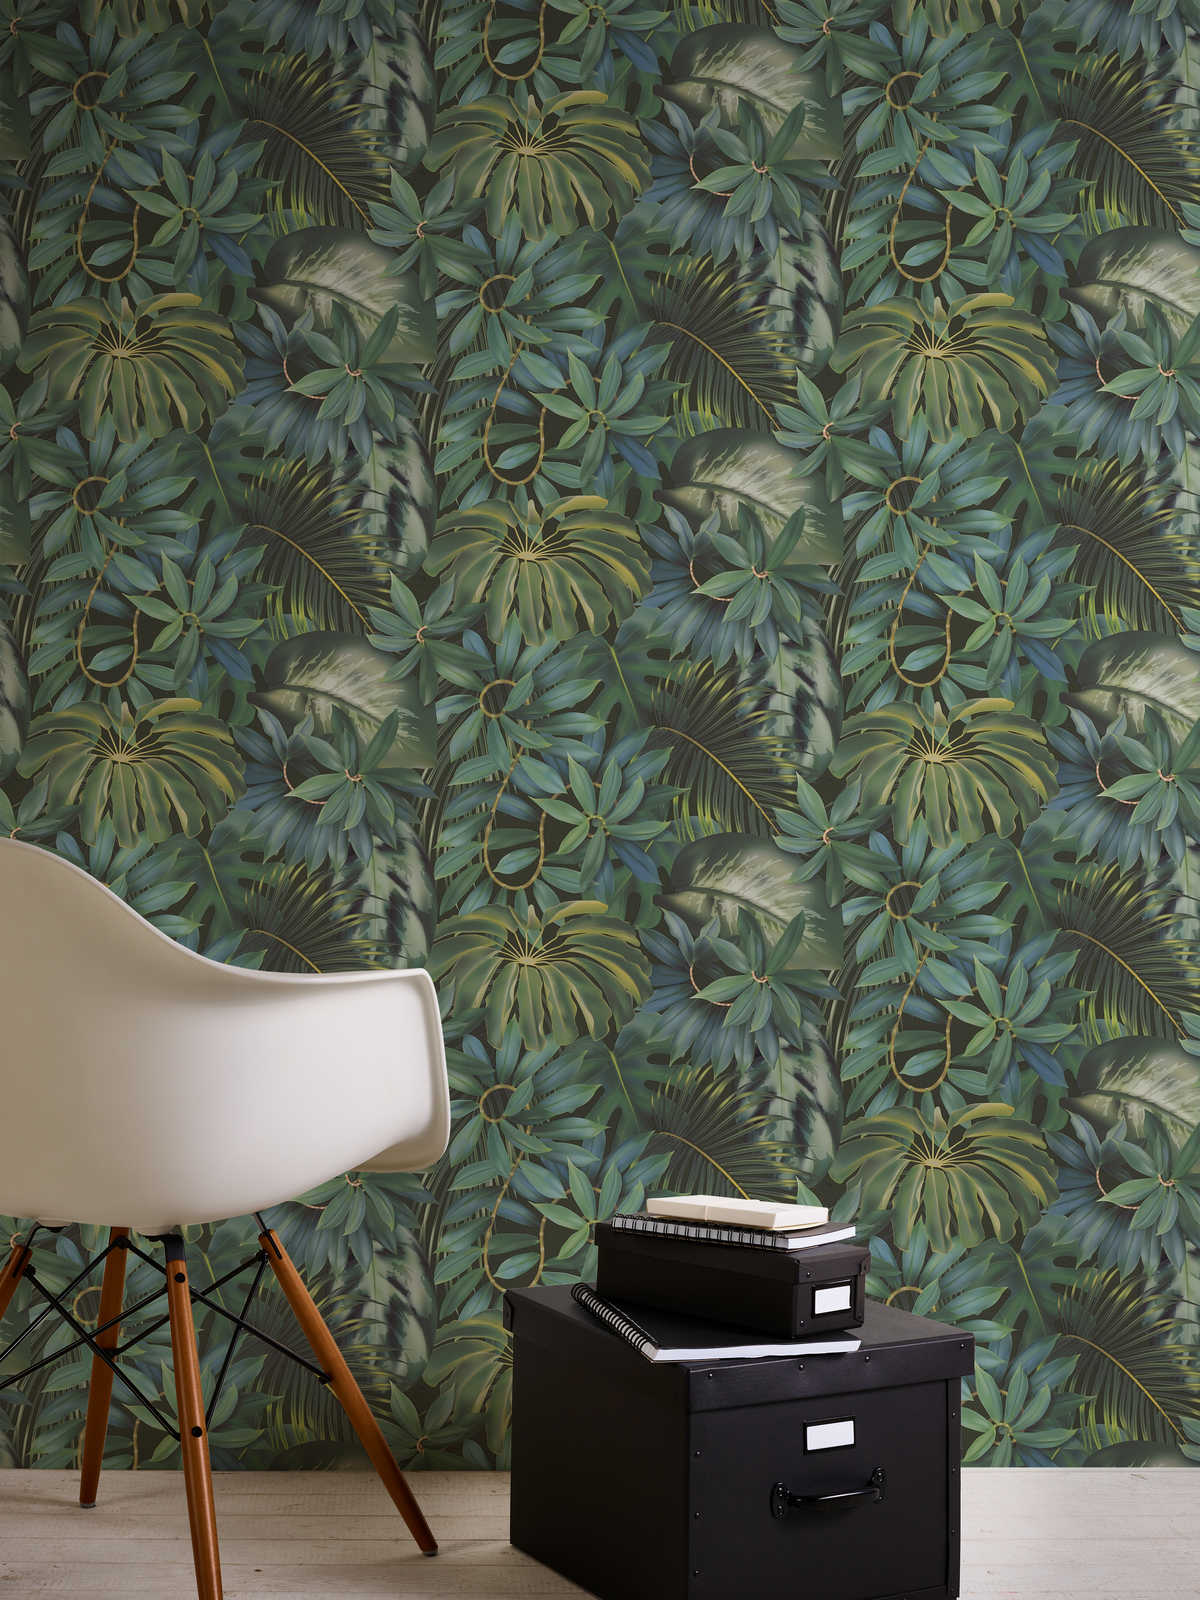             Leaves wallpaper jungle pattern - green, black
        